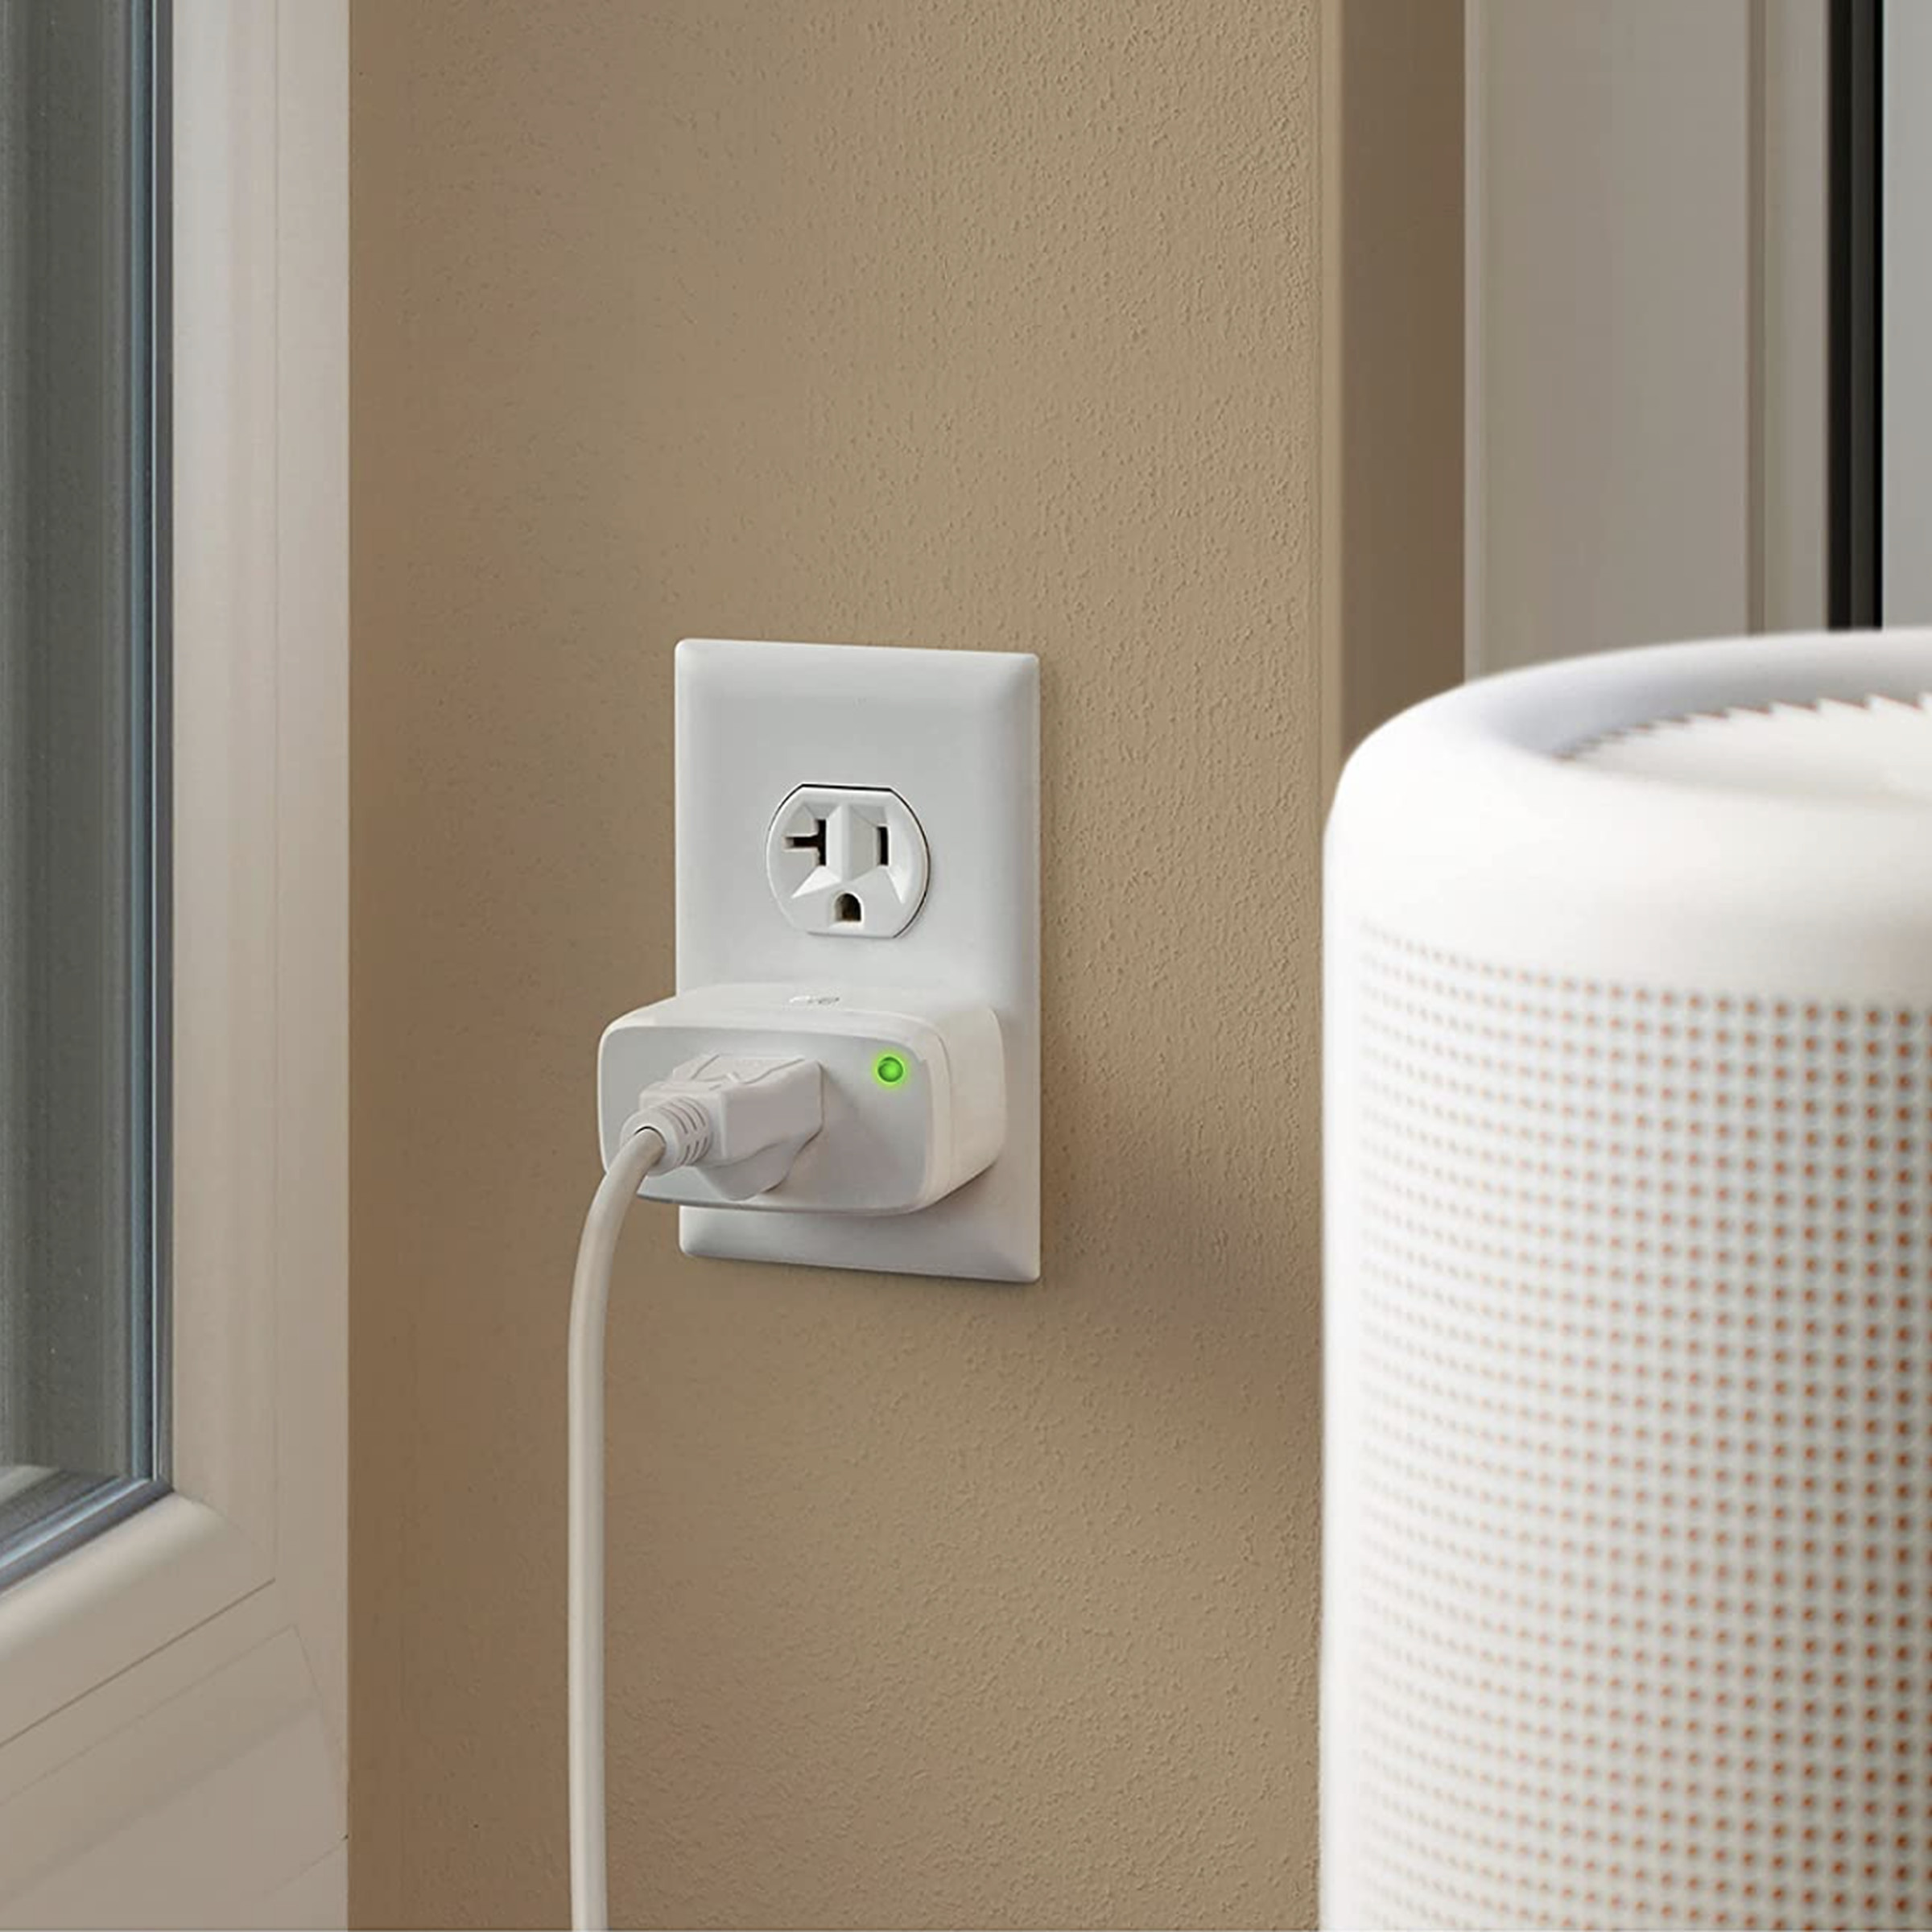 White plug in wall socket